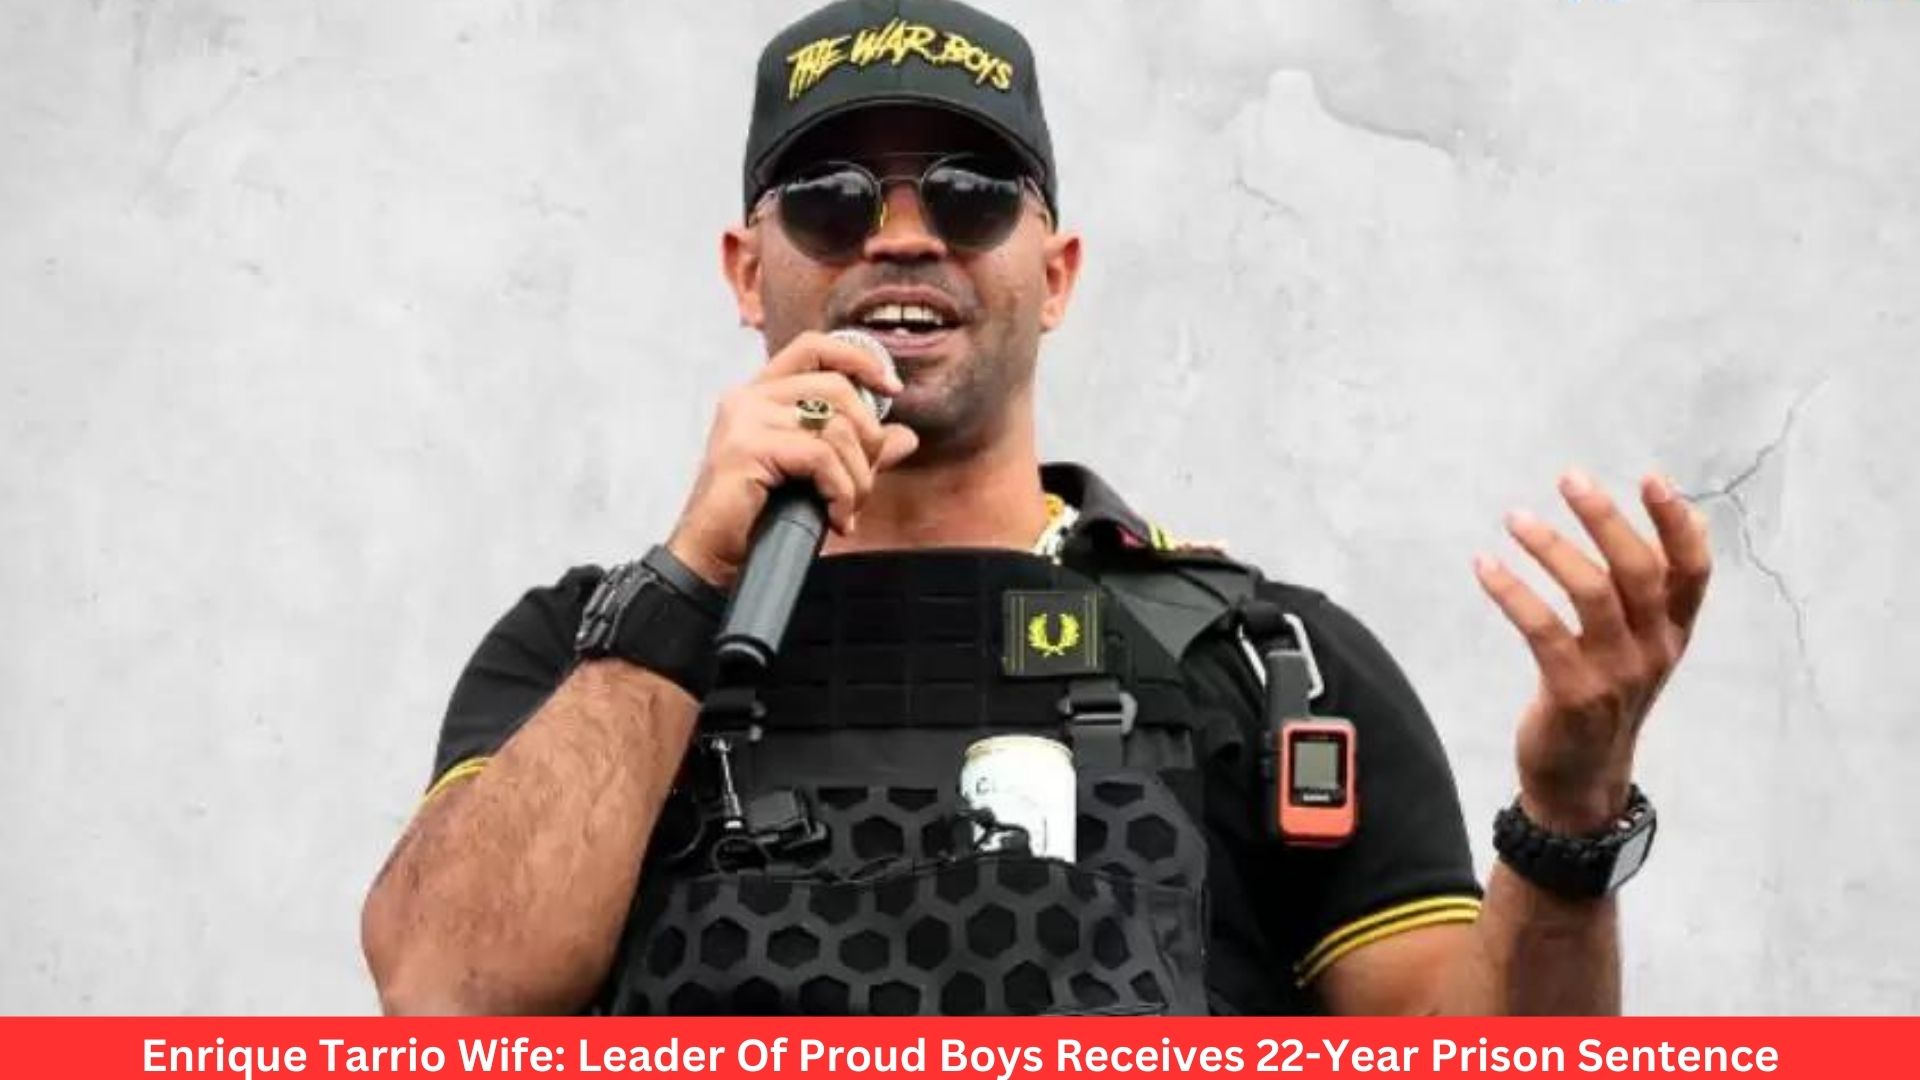 Enrique Tarrio Wife: Leader Of Proud Boys Receives 22-Year Prison Sentence